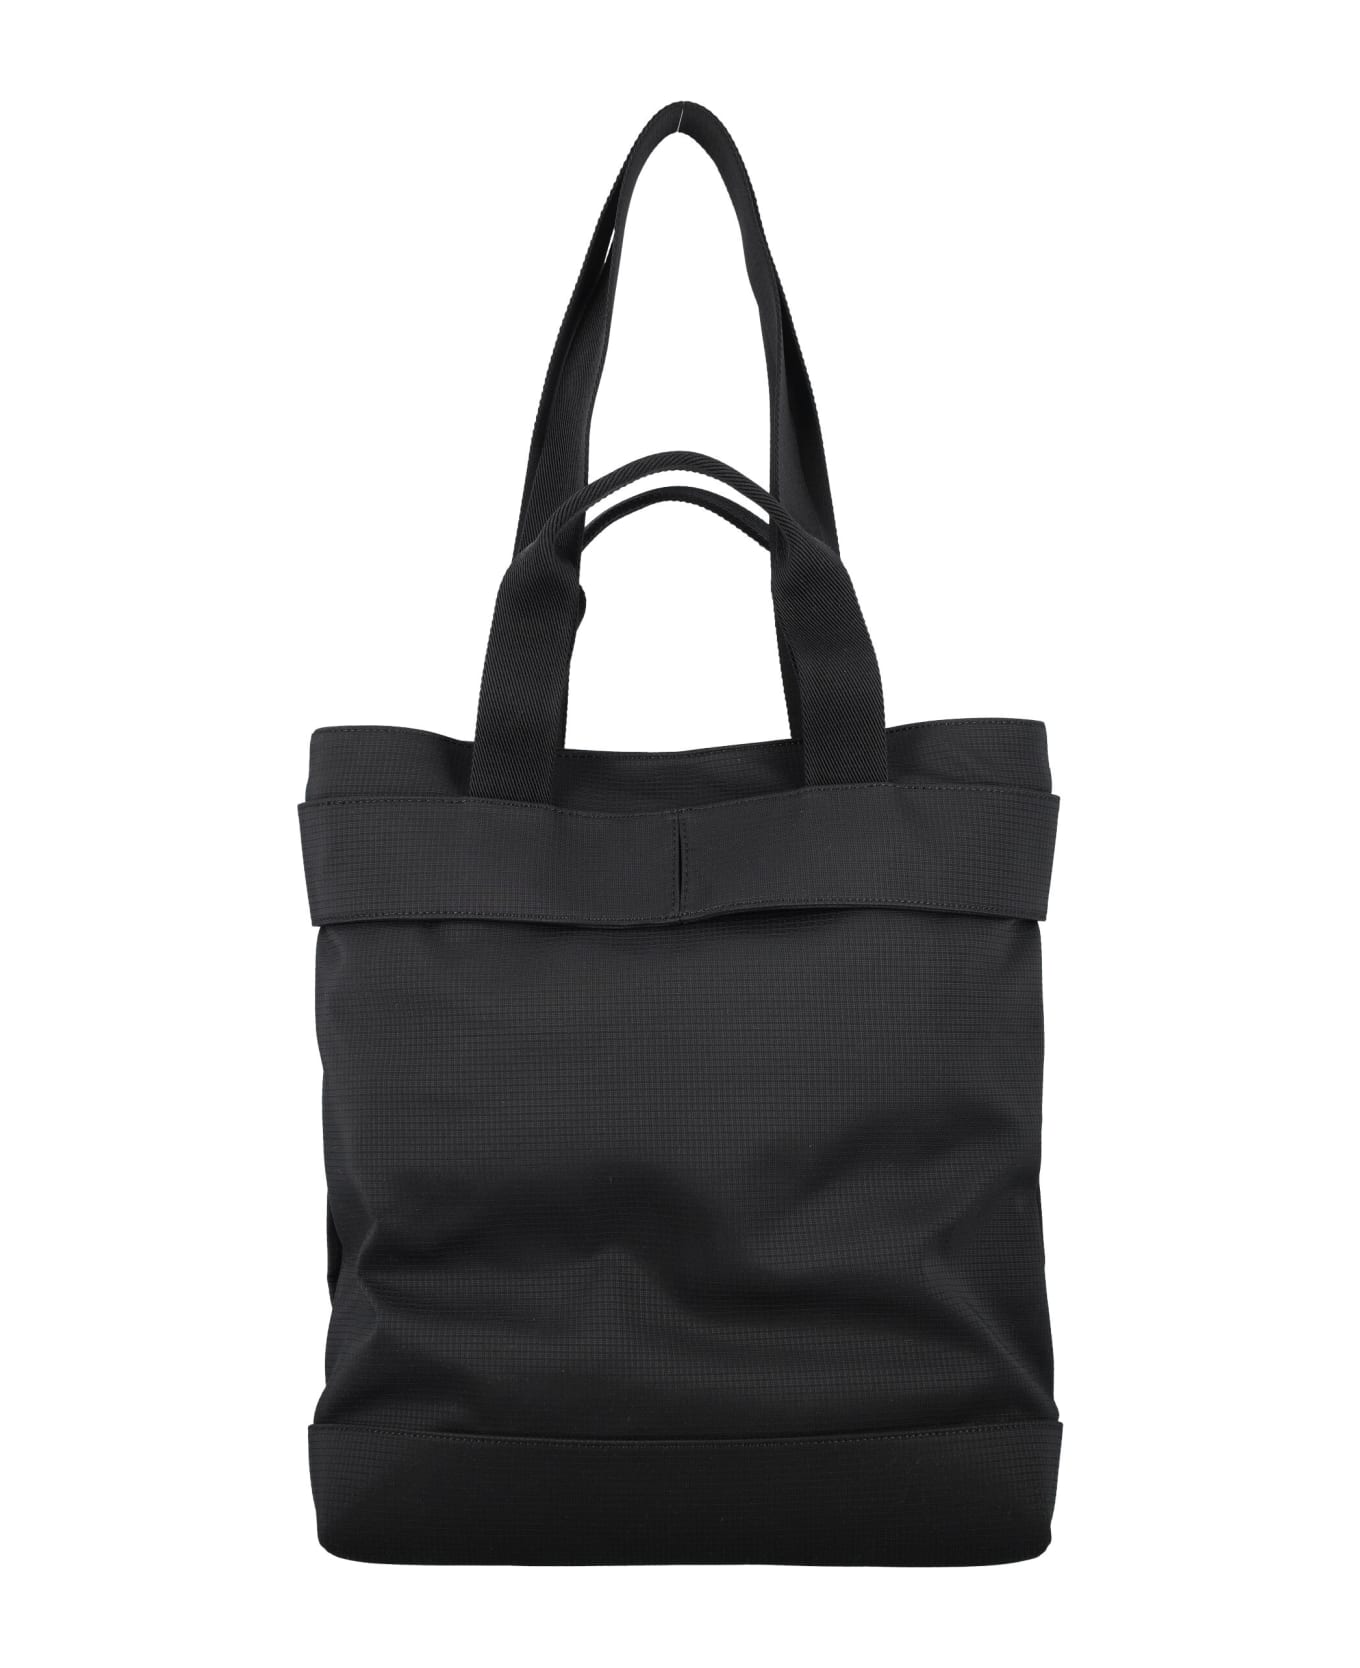 Moncler Cut Small Tote Bag - Black